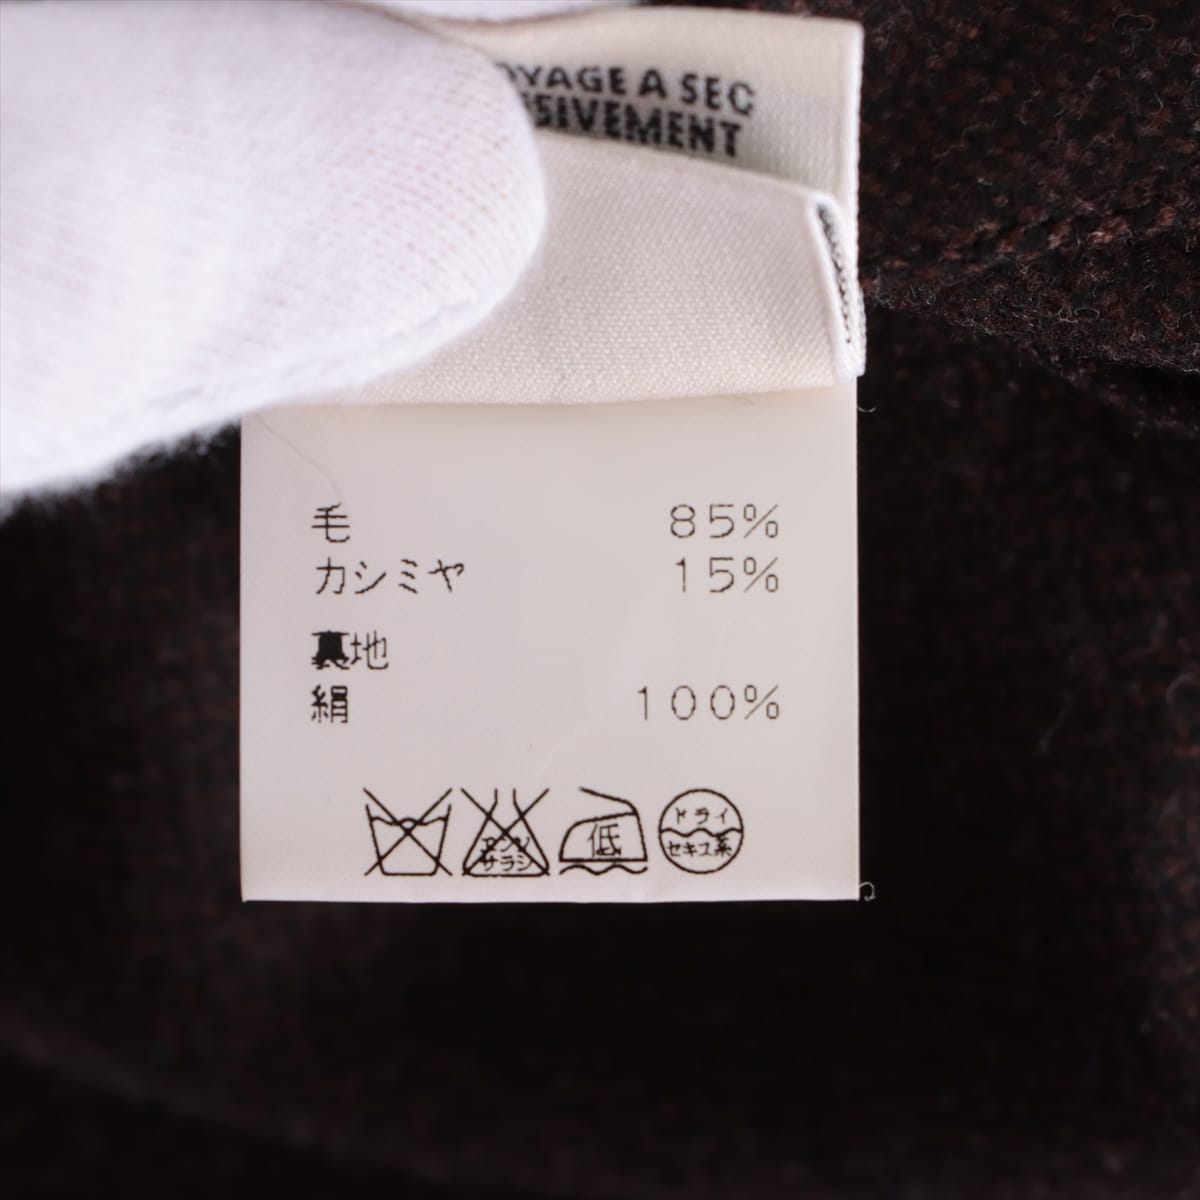 Hermès Wool & cashmere Setup 34 Ladies' Brown  Margiela Pants size unknown